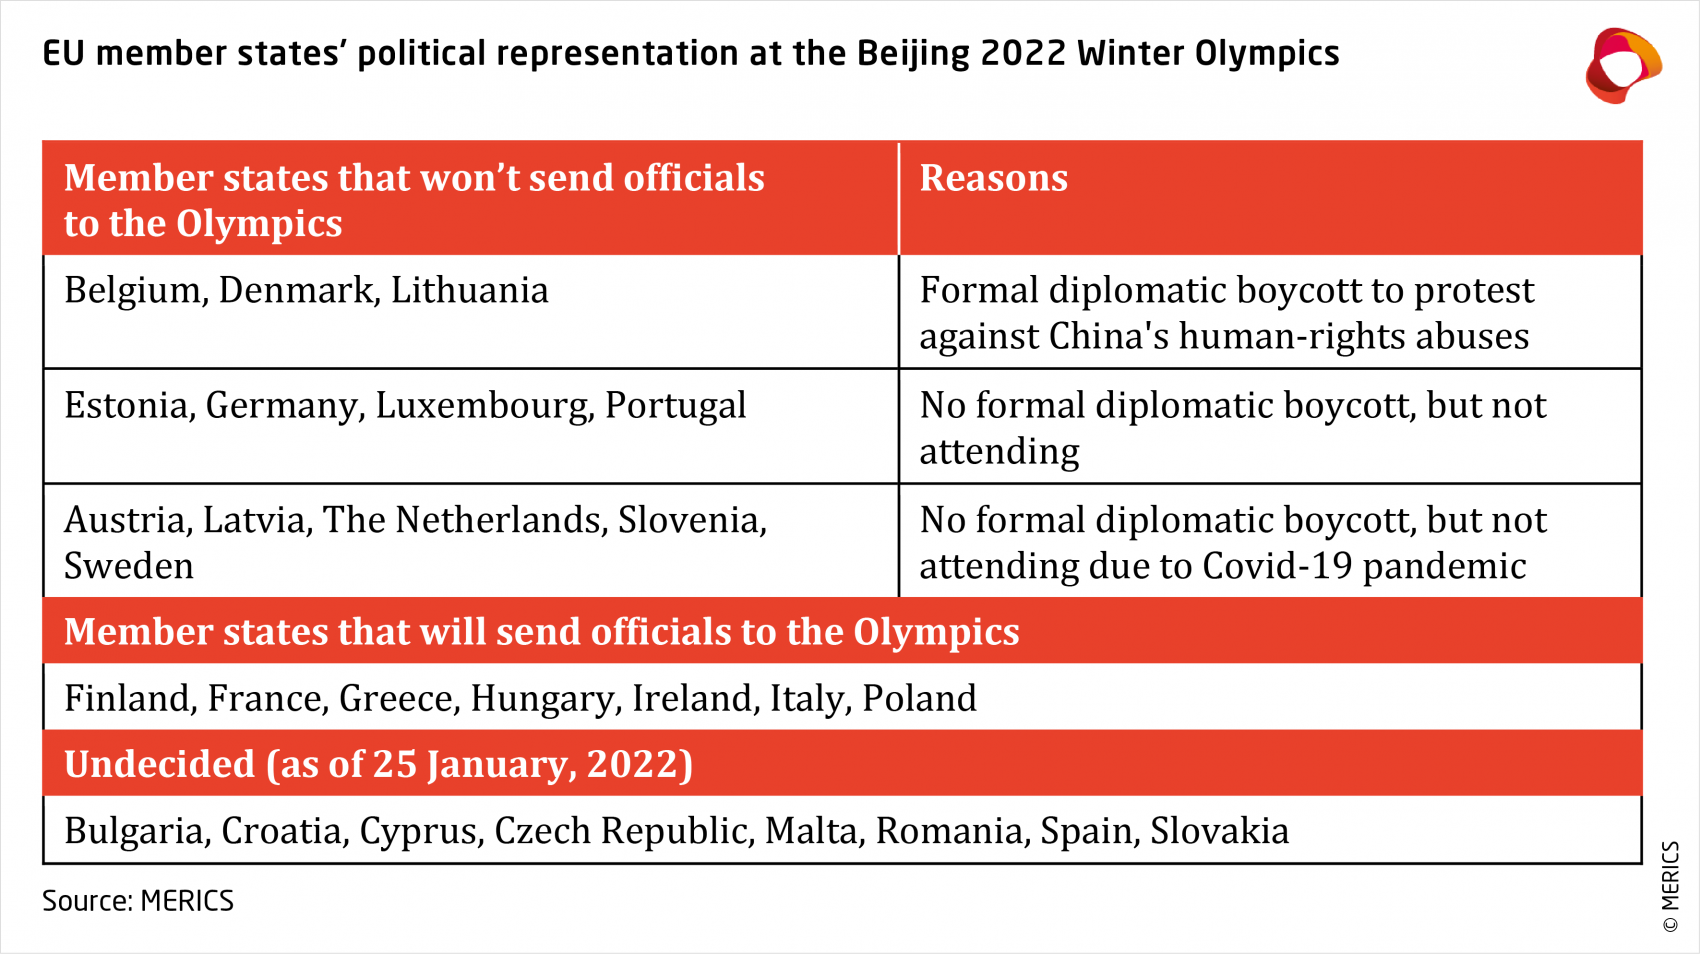 EU member states`political representation at Beijing 2022